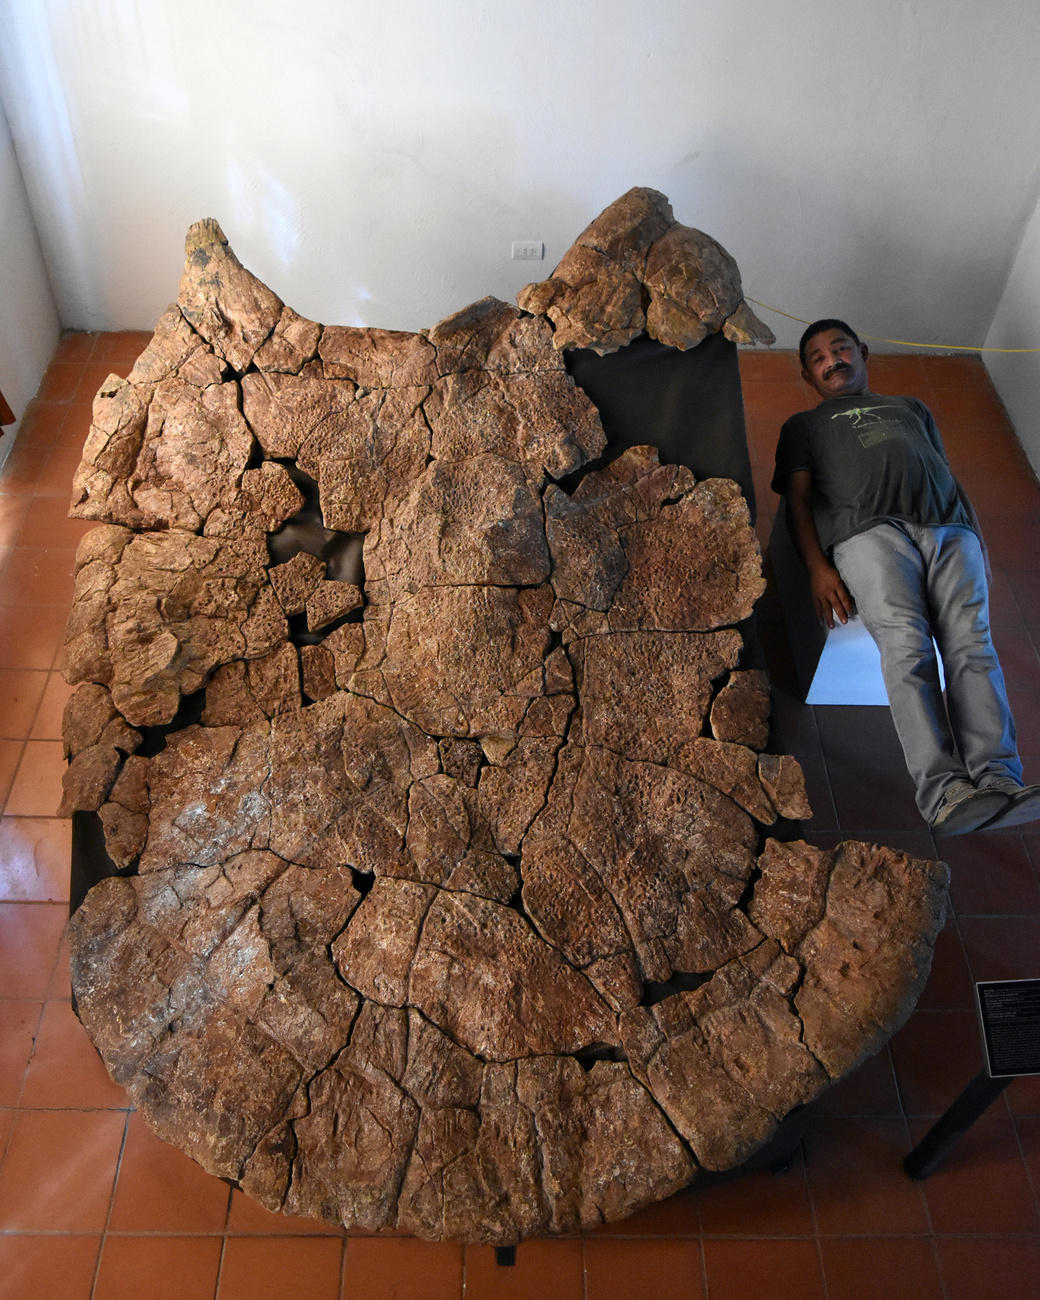 Venezuelan paleontologist Rodolfo Sanchez lies next to the shell of a Stupendemys geographicus specimen.